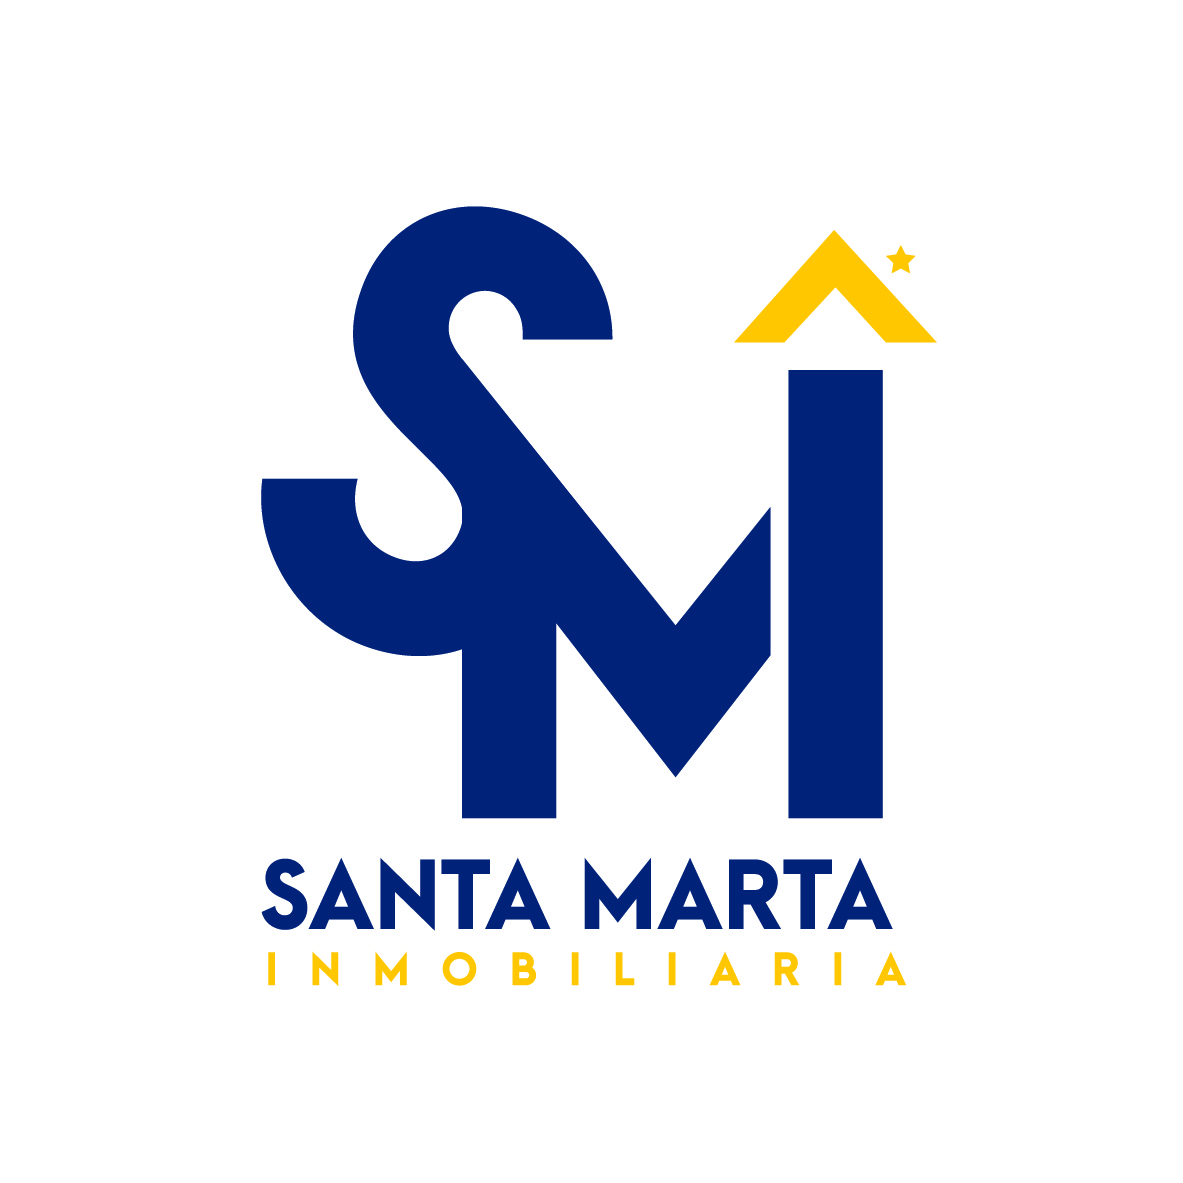 Santa Marta Inmobiliaria S.A.S